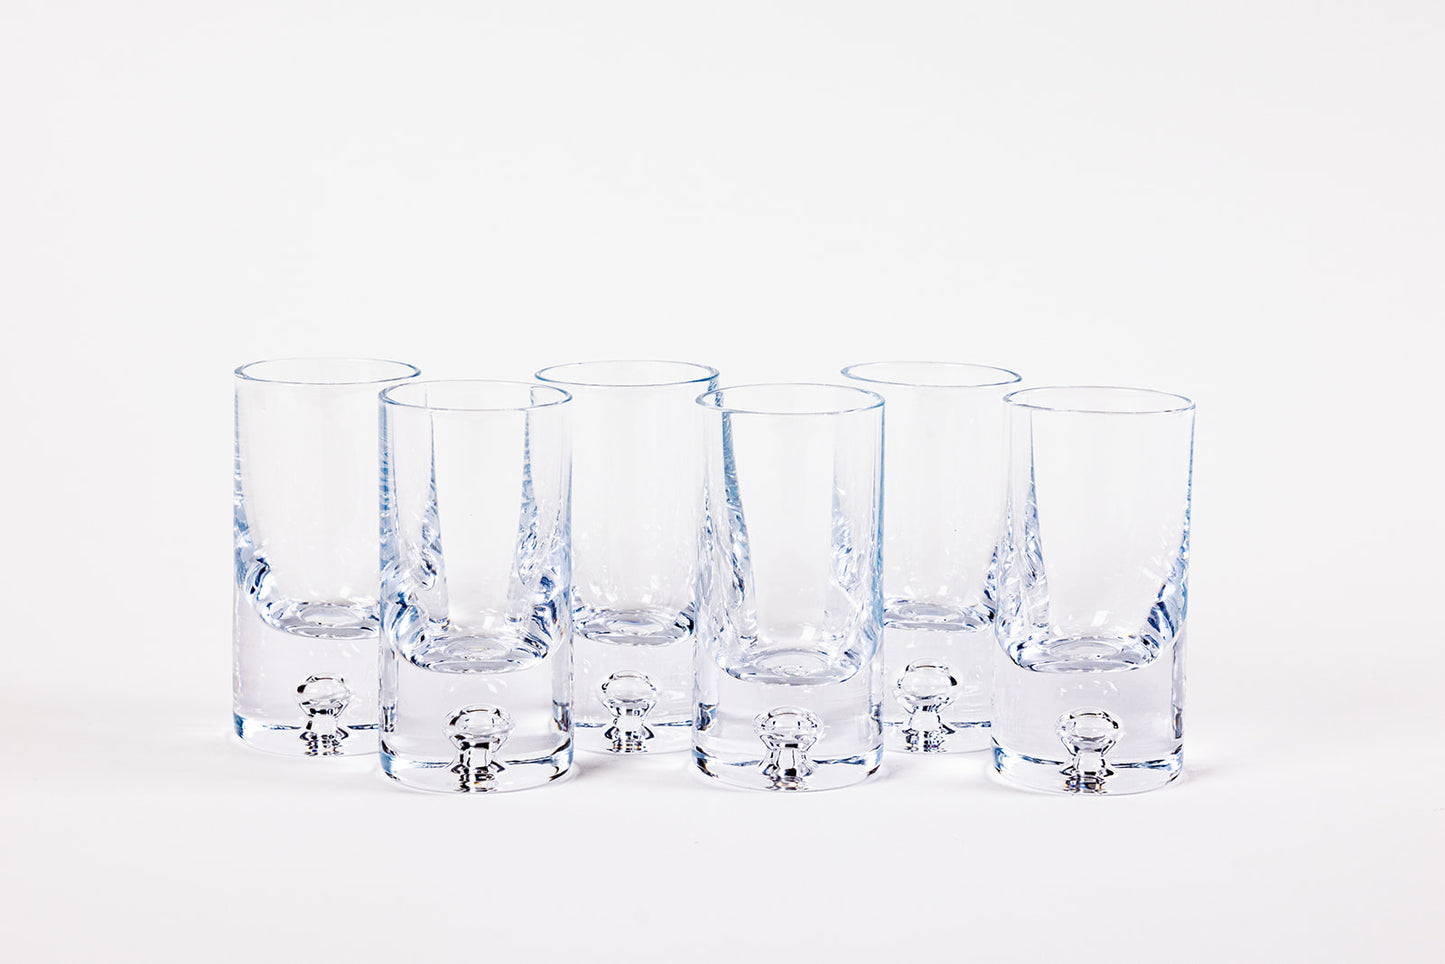 Shot Glasses - Set of 6